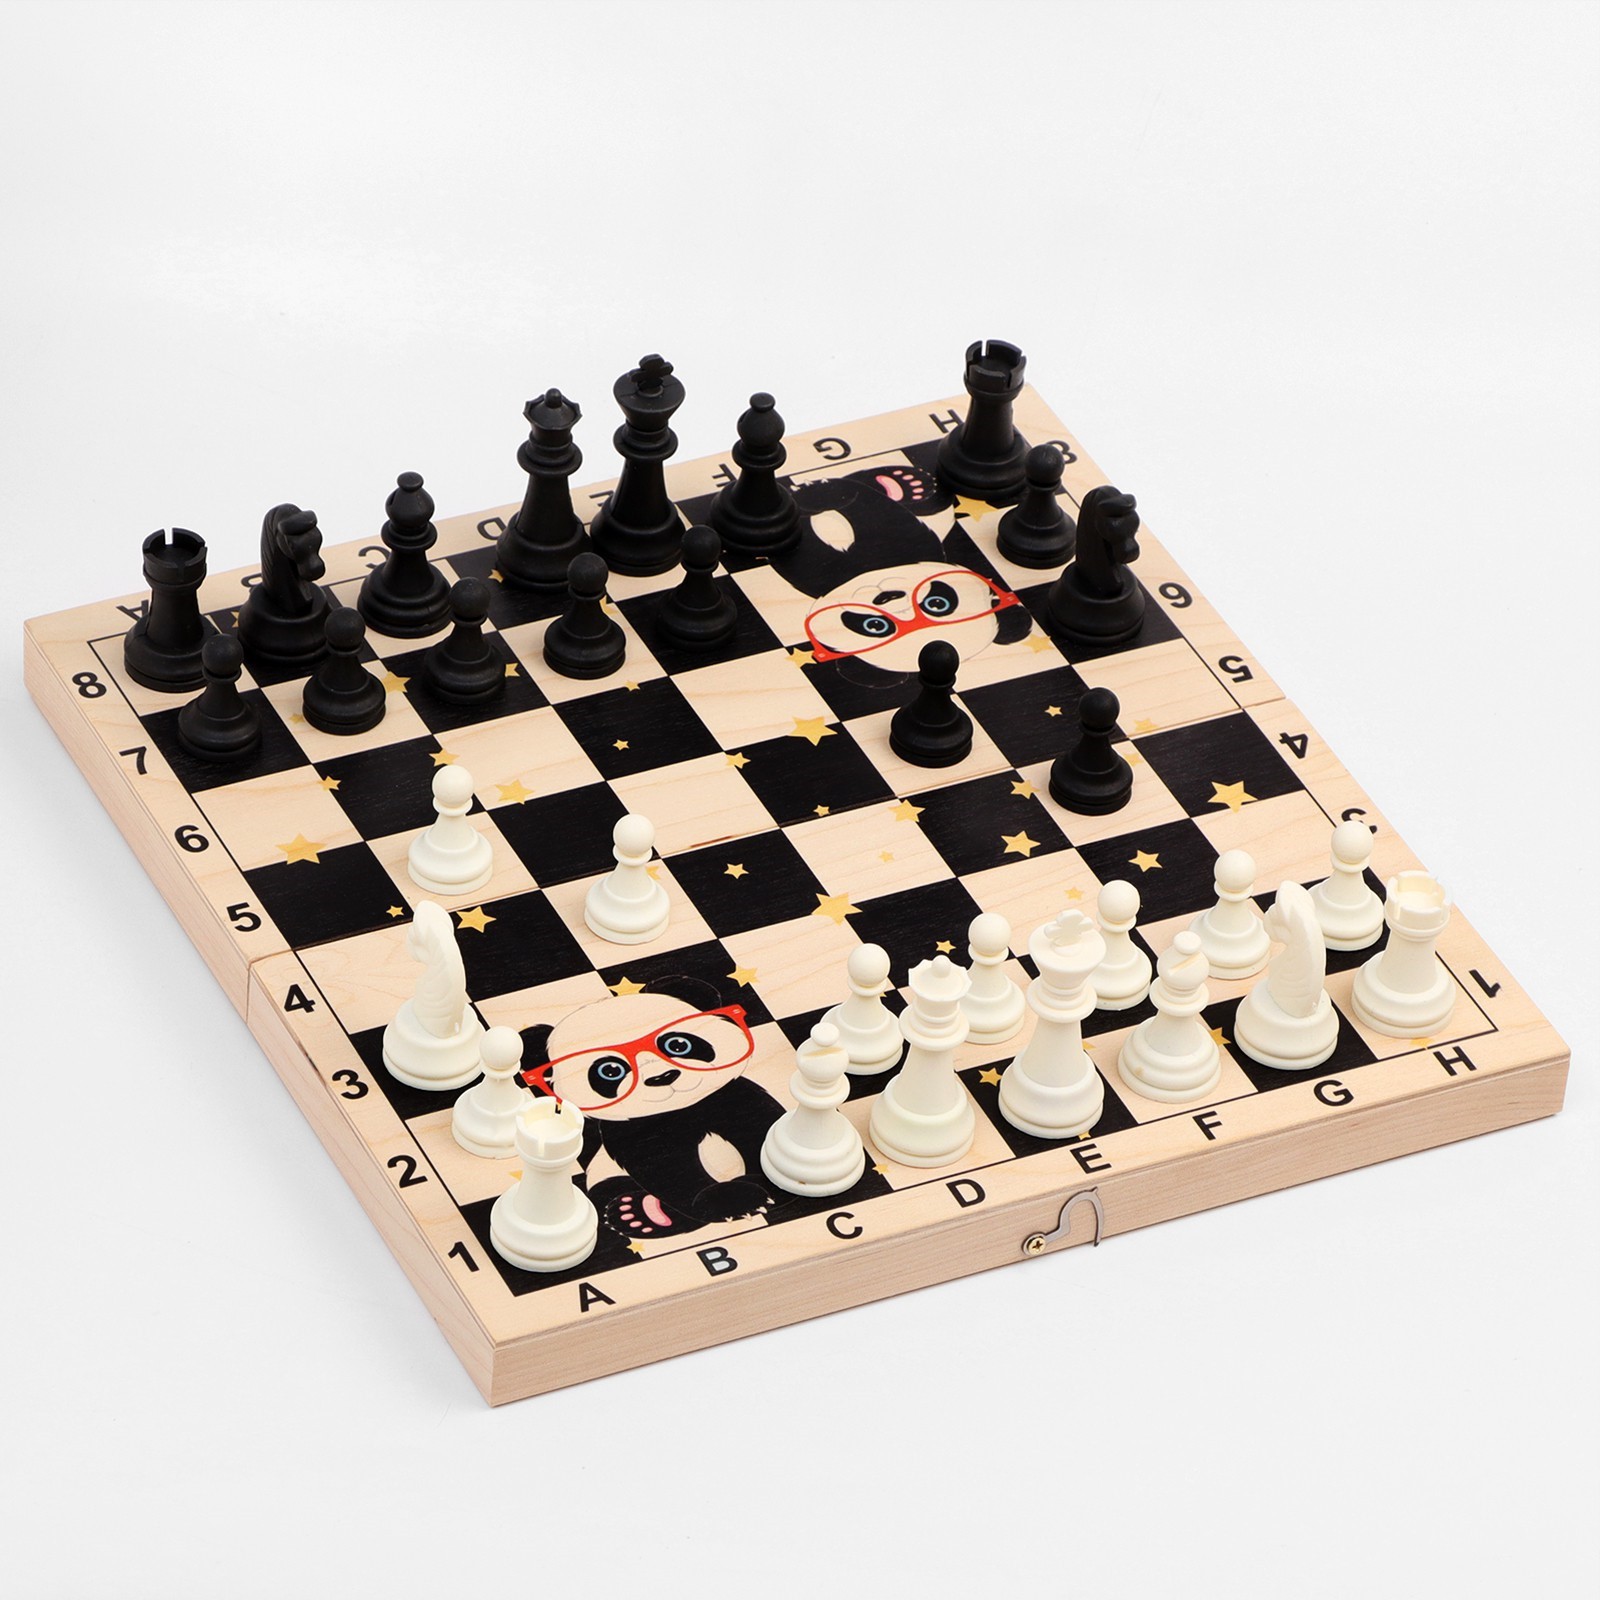 Шахматы Sima-Land обиходные «Панды» король h 6.2 см пешка h 3.2 см доска 29х29 см - фото 8